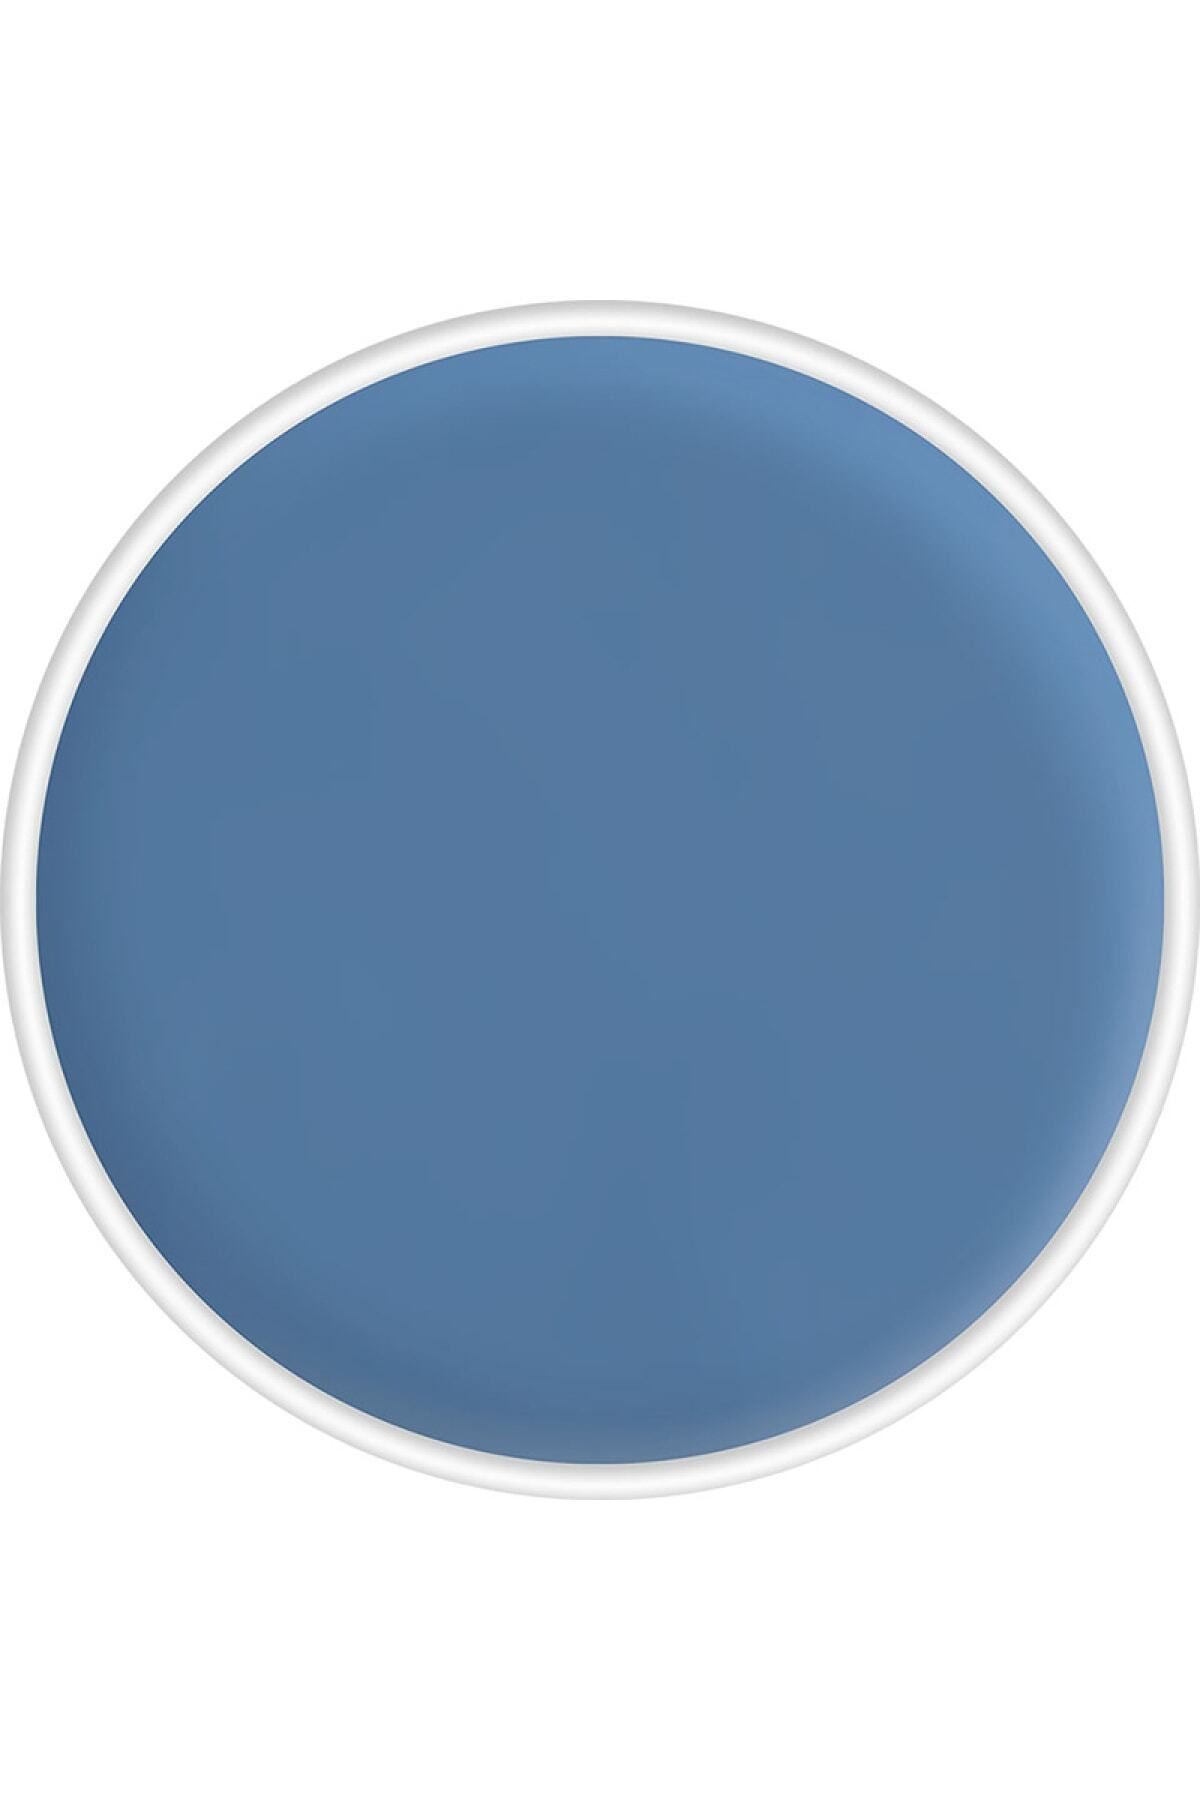 Kryolan آبرنگ چشم مایع کریولان 4 میلی لیتر رنگ آبی1